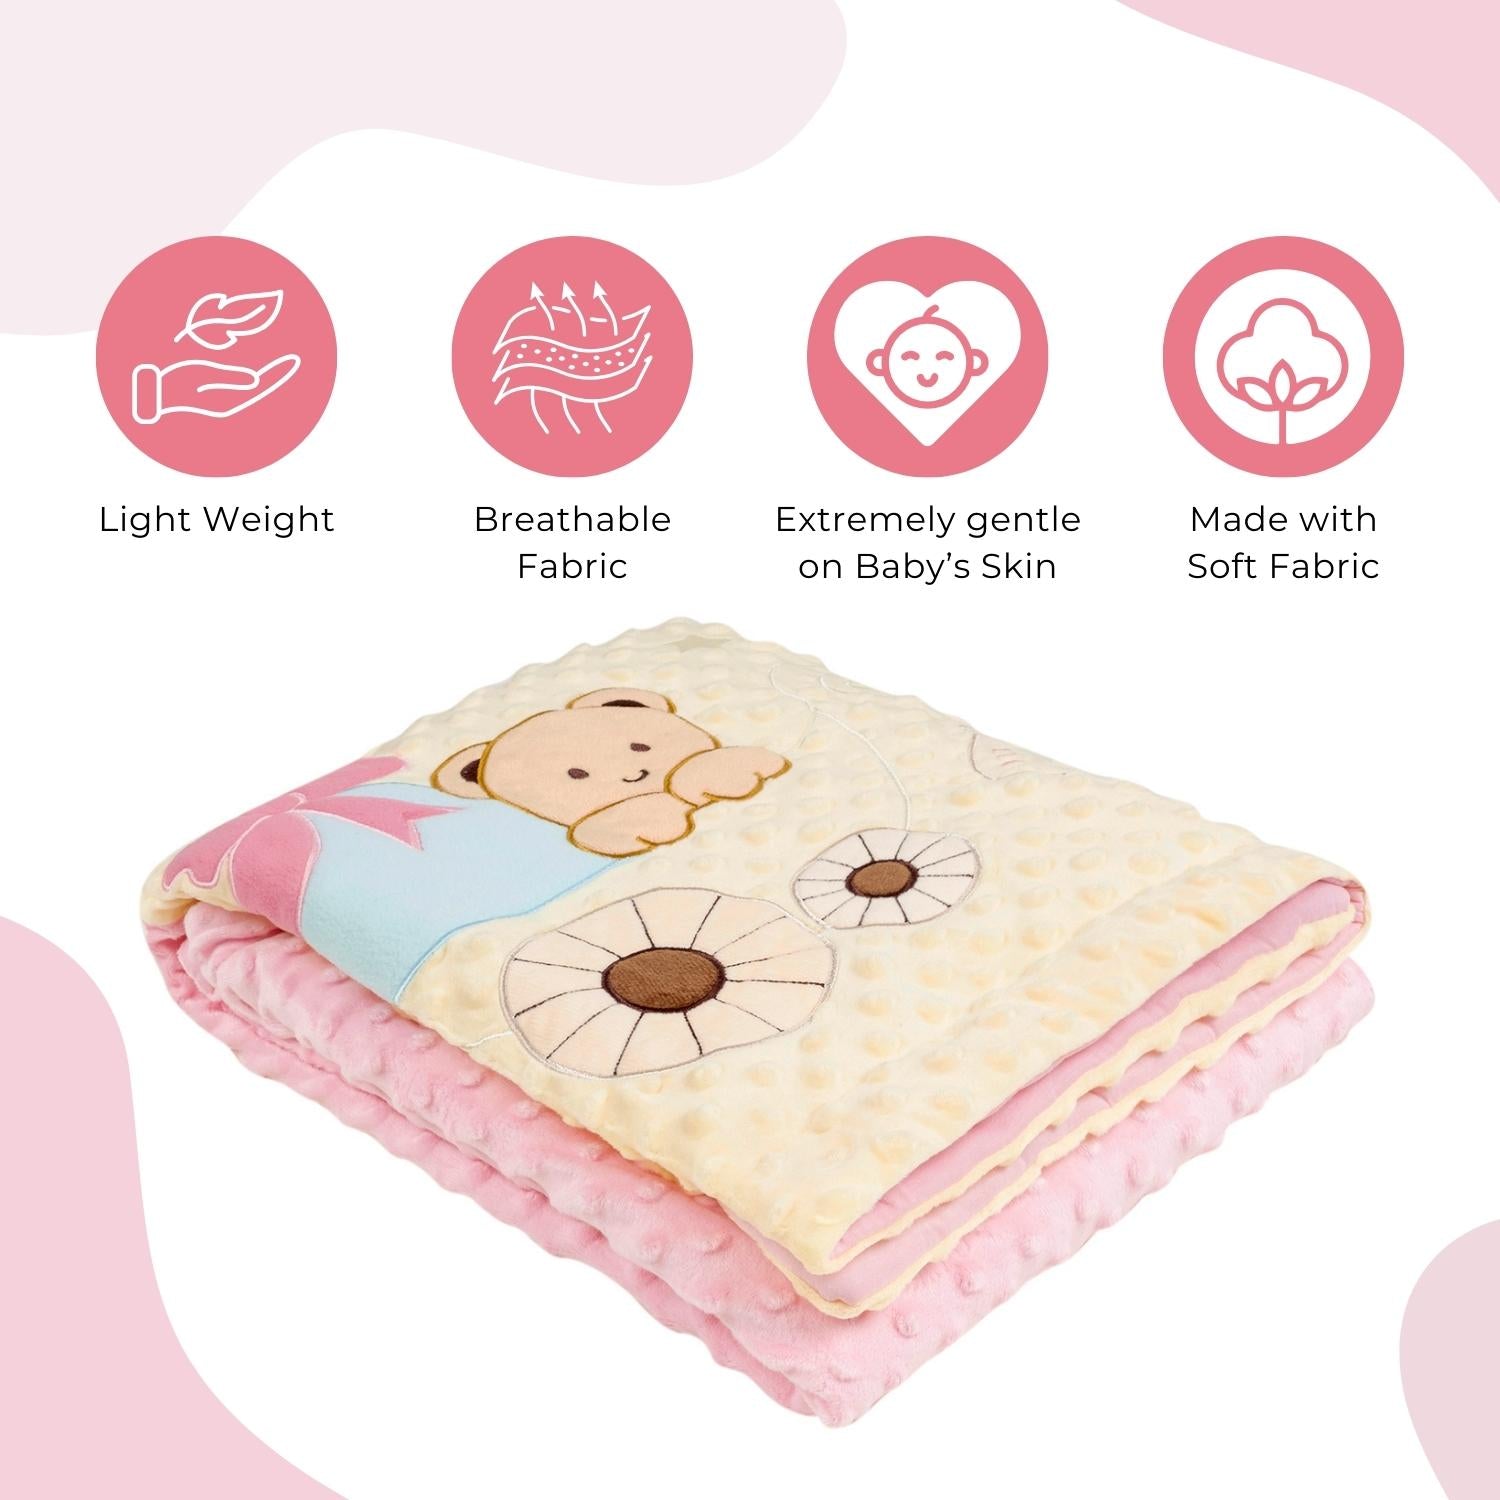 Baby Moo Bear in Pram Plush Cotton All Season Nursery Blanket - Pink